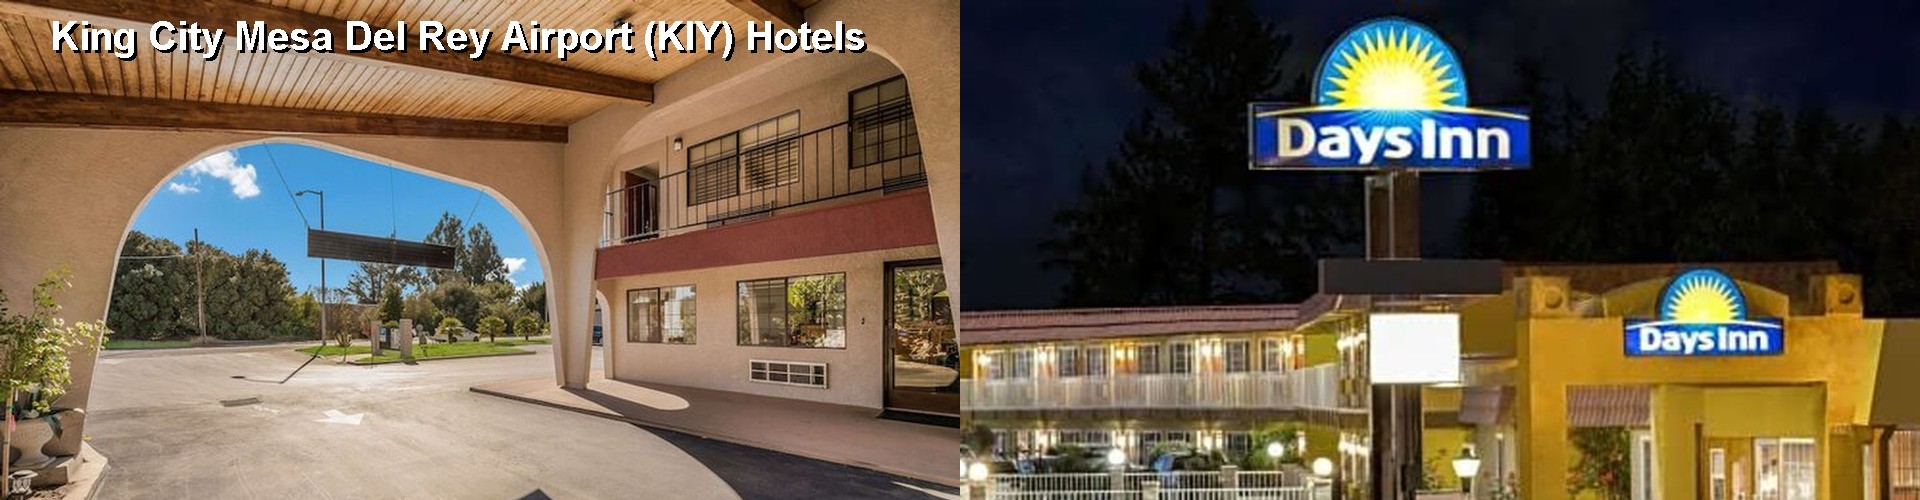 1 Best Hotels near King City Mesa Del Rey Airport (KIY)